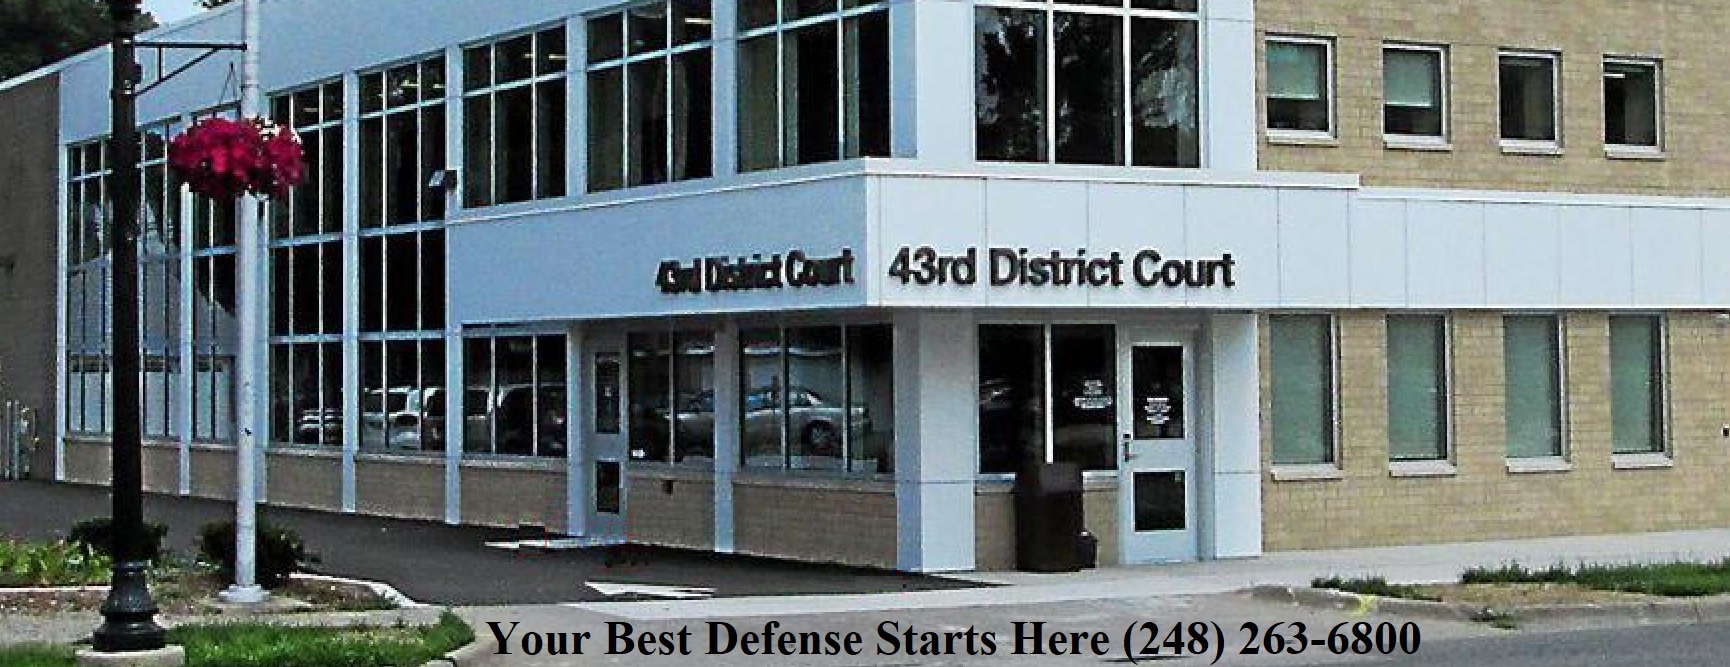 43rd District Court Ferndale MI